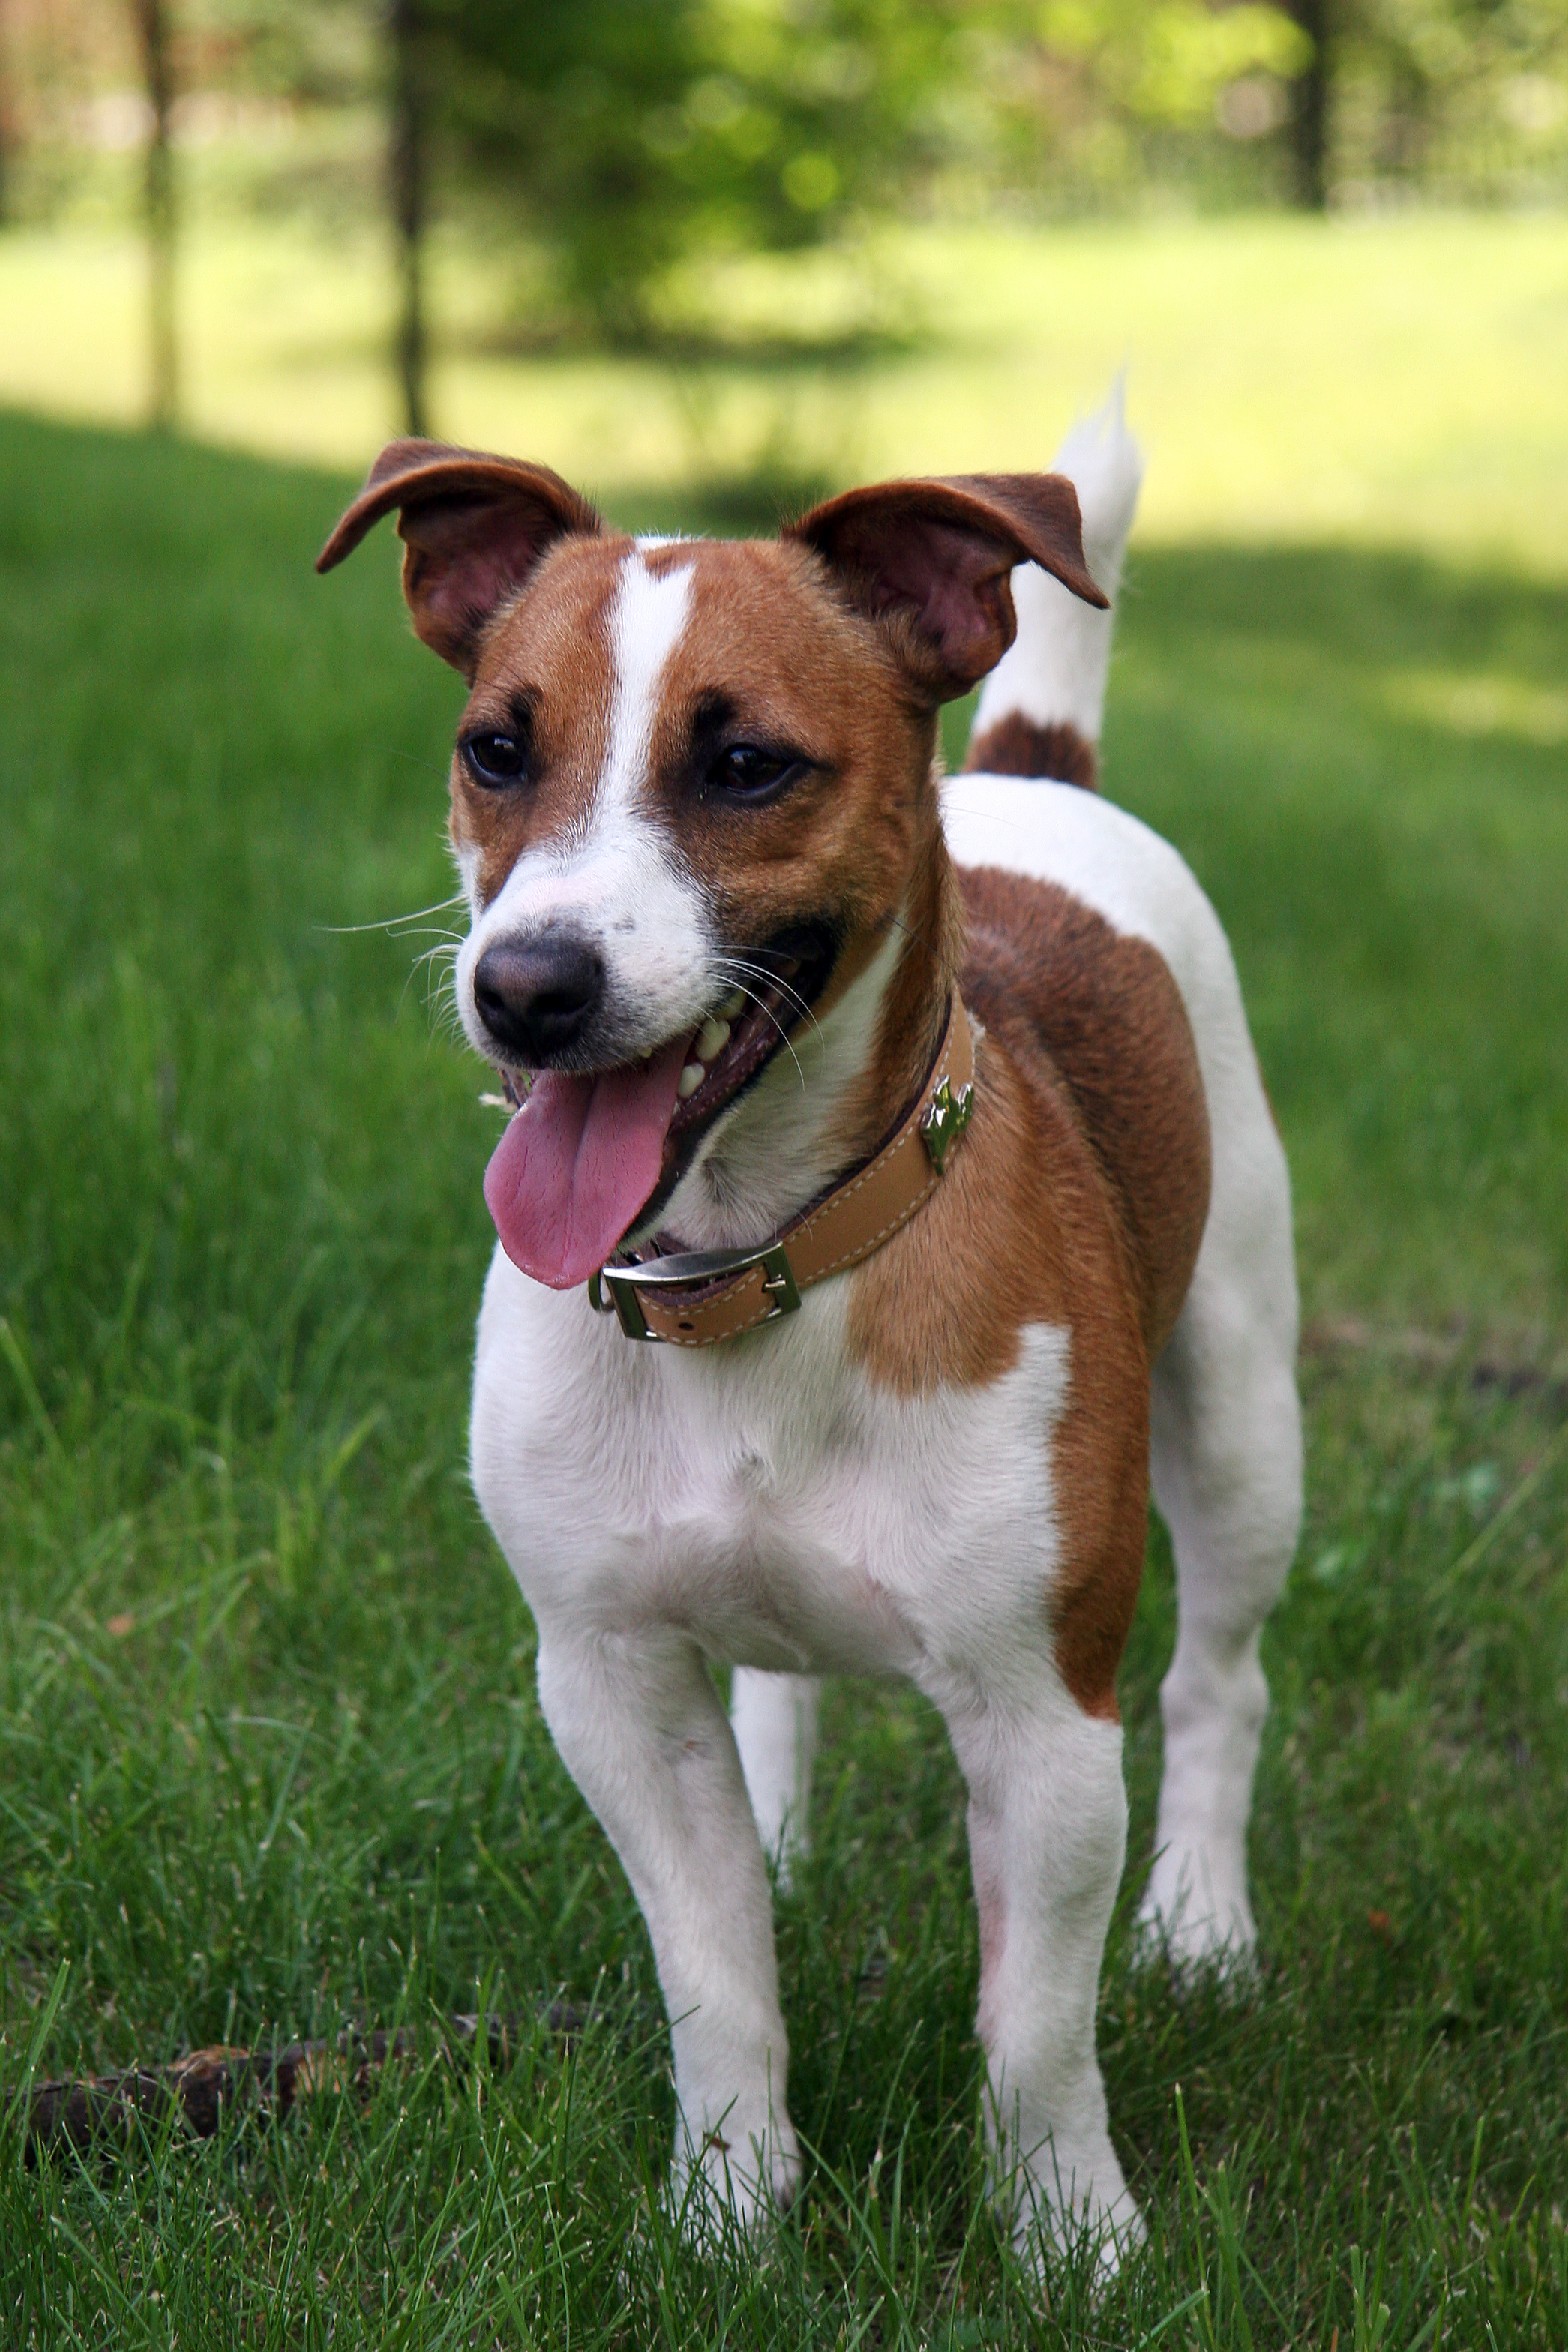 Jack terrier - Wikipedia, enciclopedia